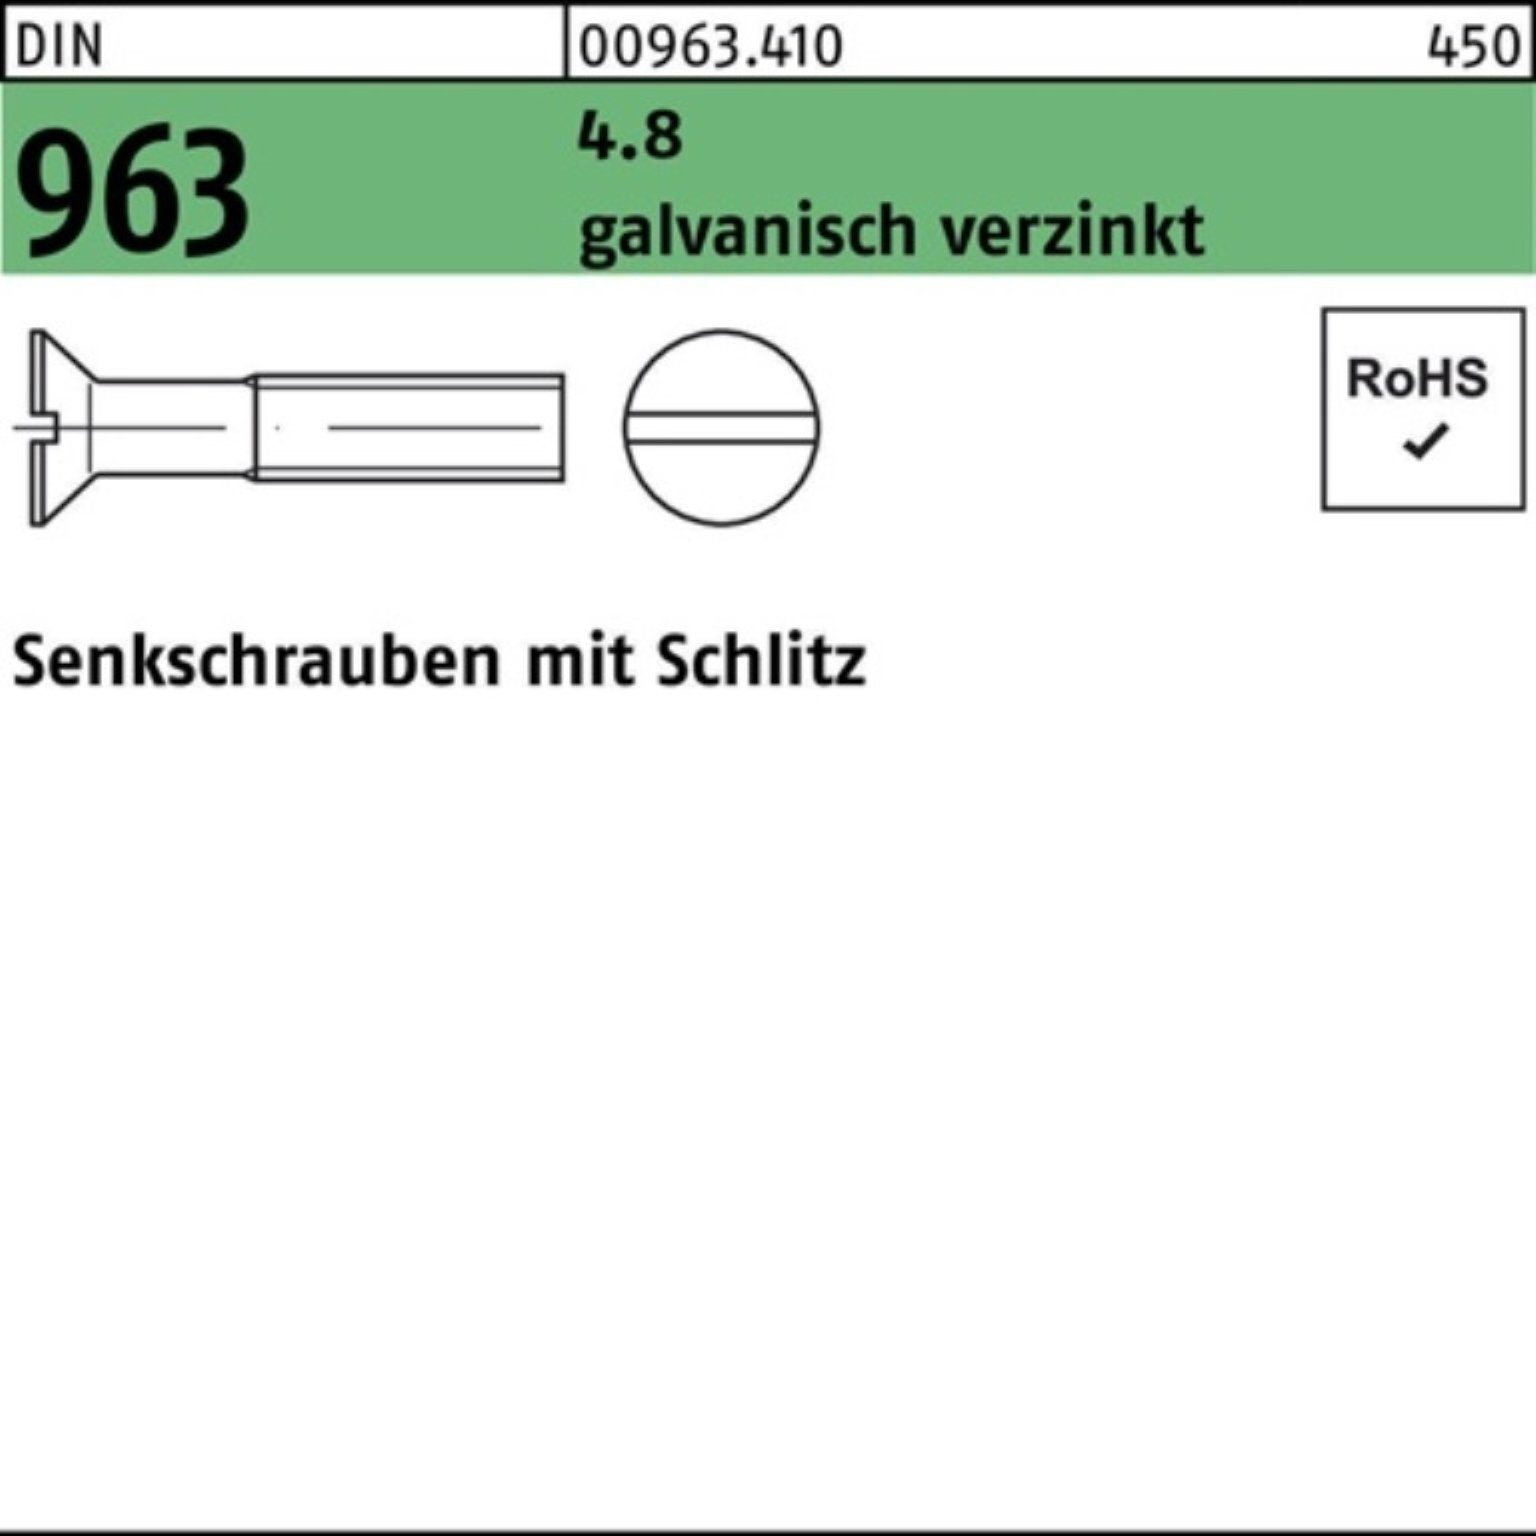 Reyher Senkschraube 200er Pack Stü 963 4.8 DIN 50 M5x Senkschraube Schlitz galv.verz. 200